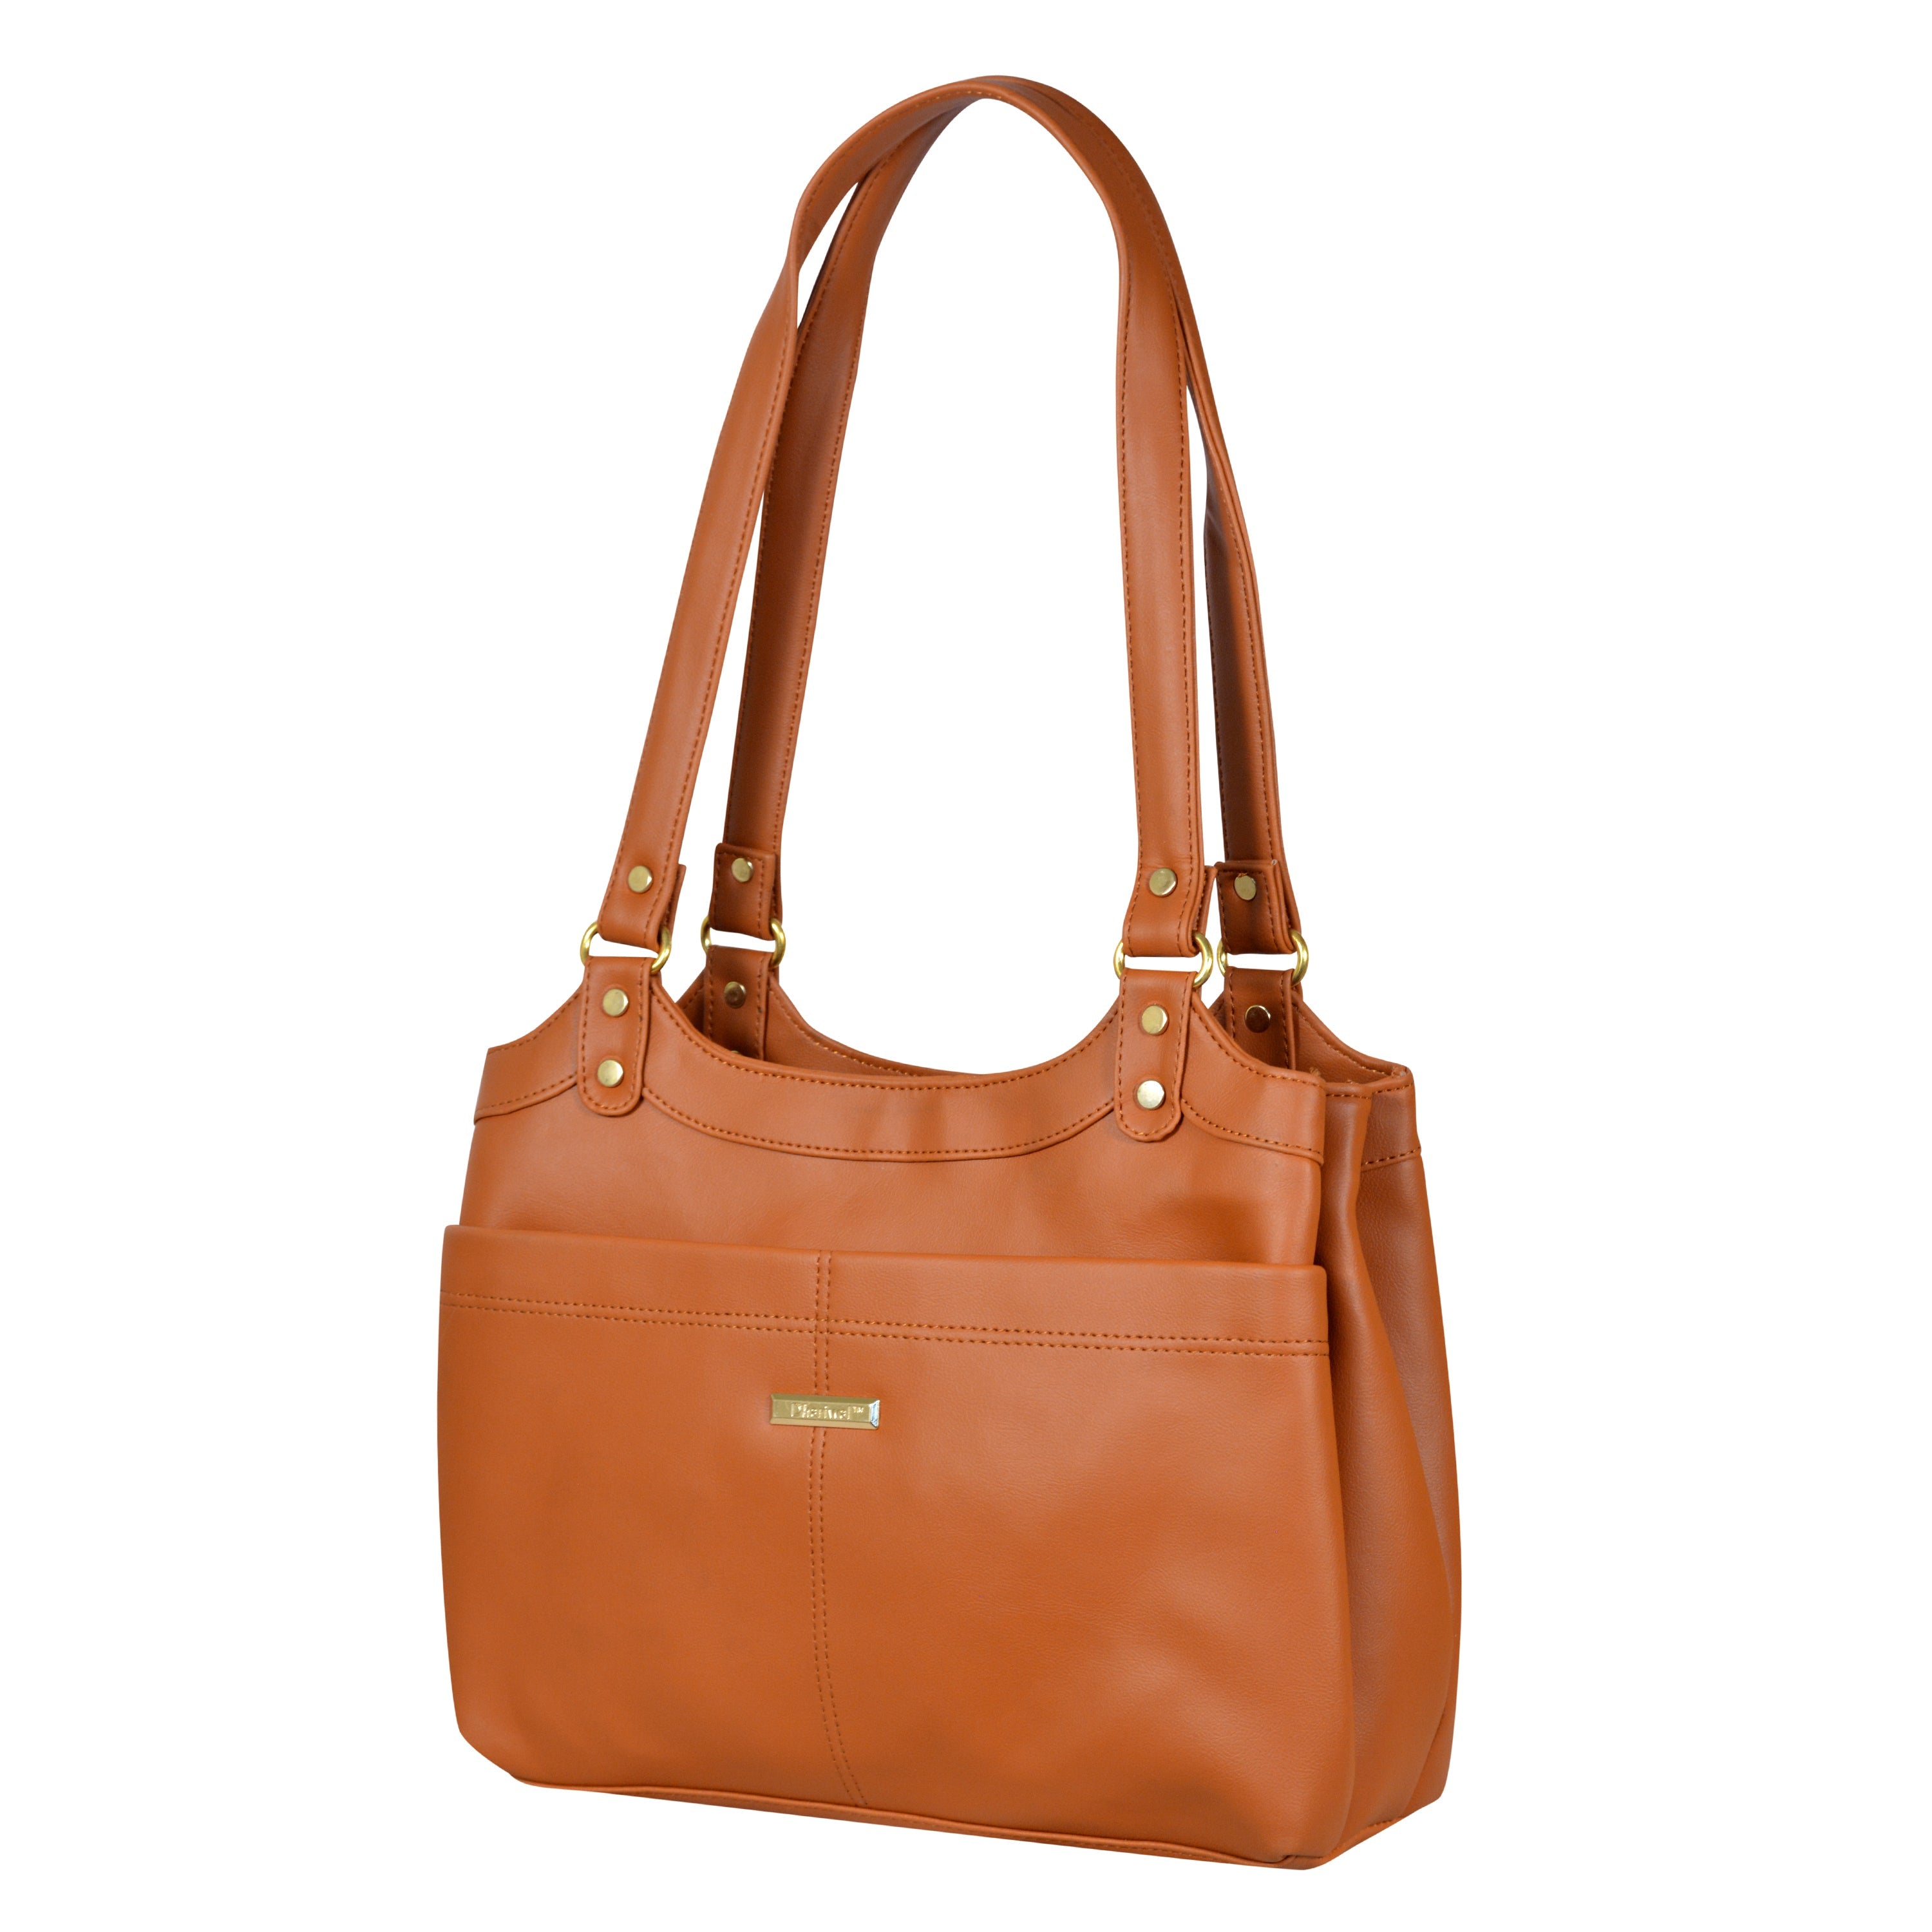 Handbags: Buy Latest Handbags Online at Best Prices - Zouk